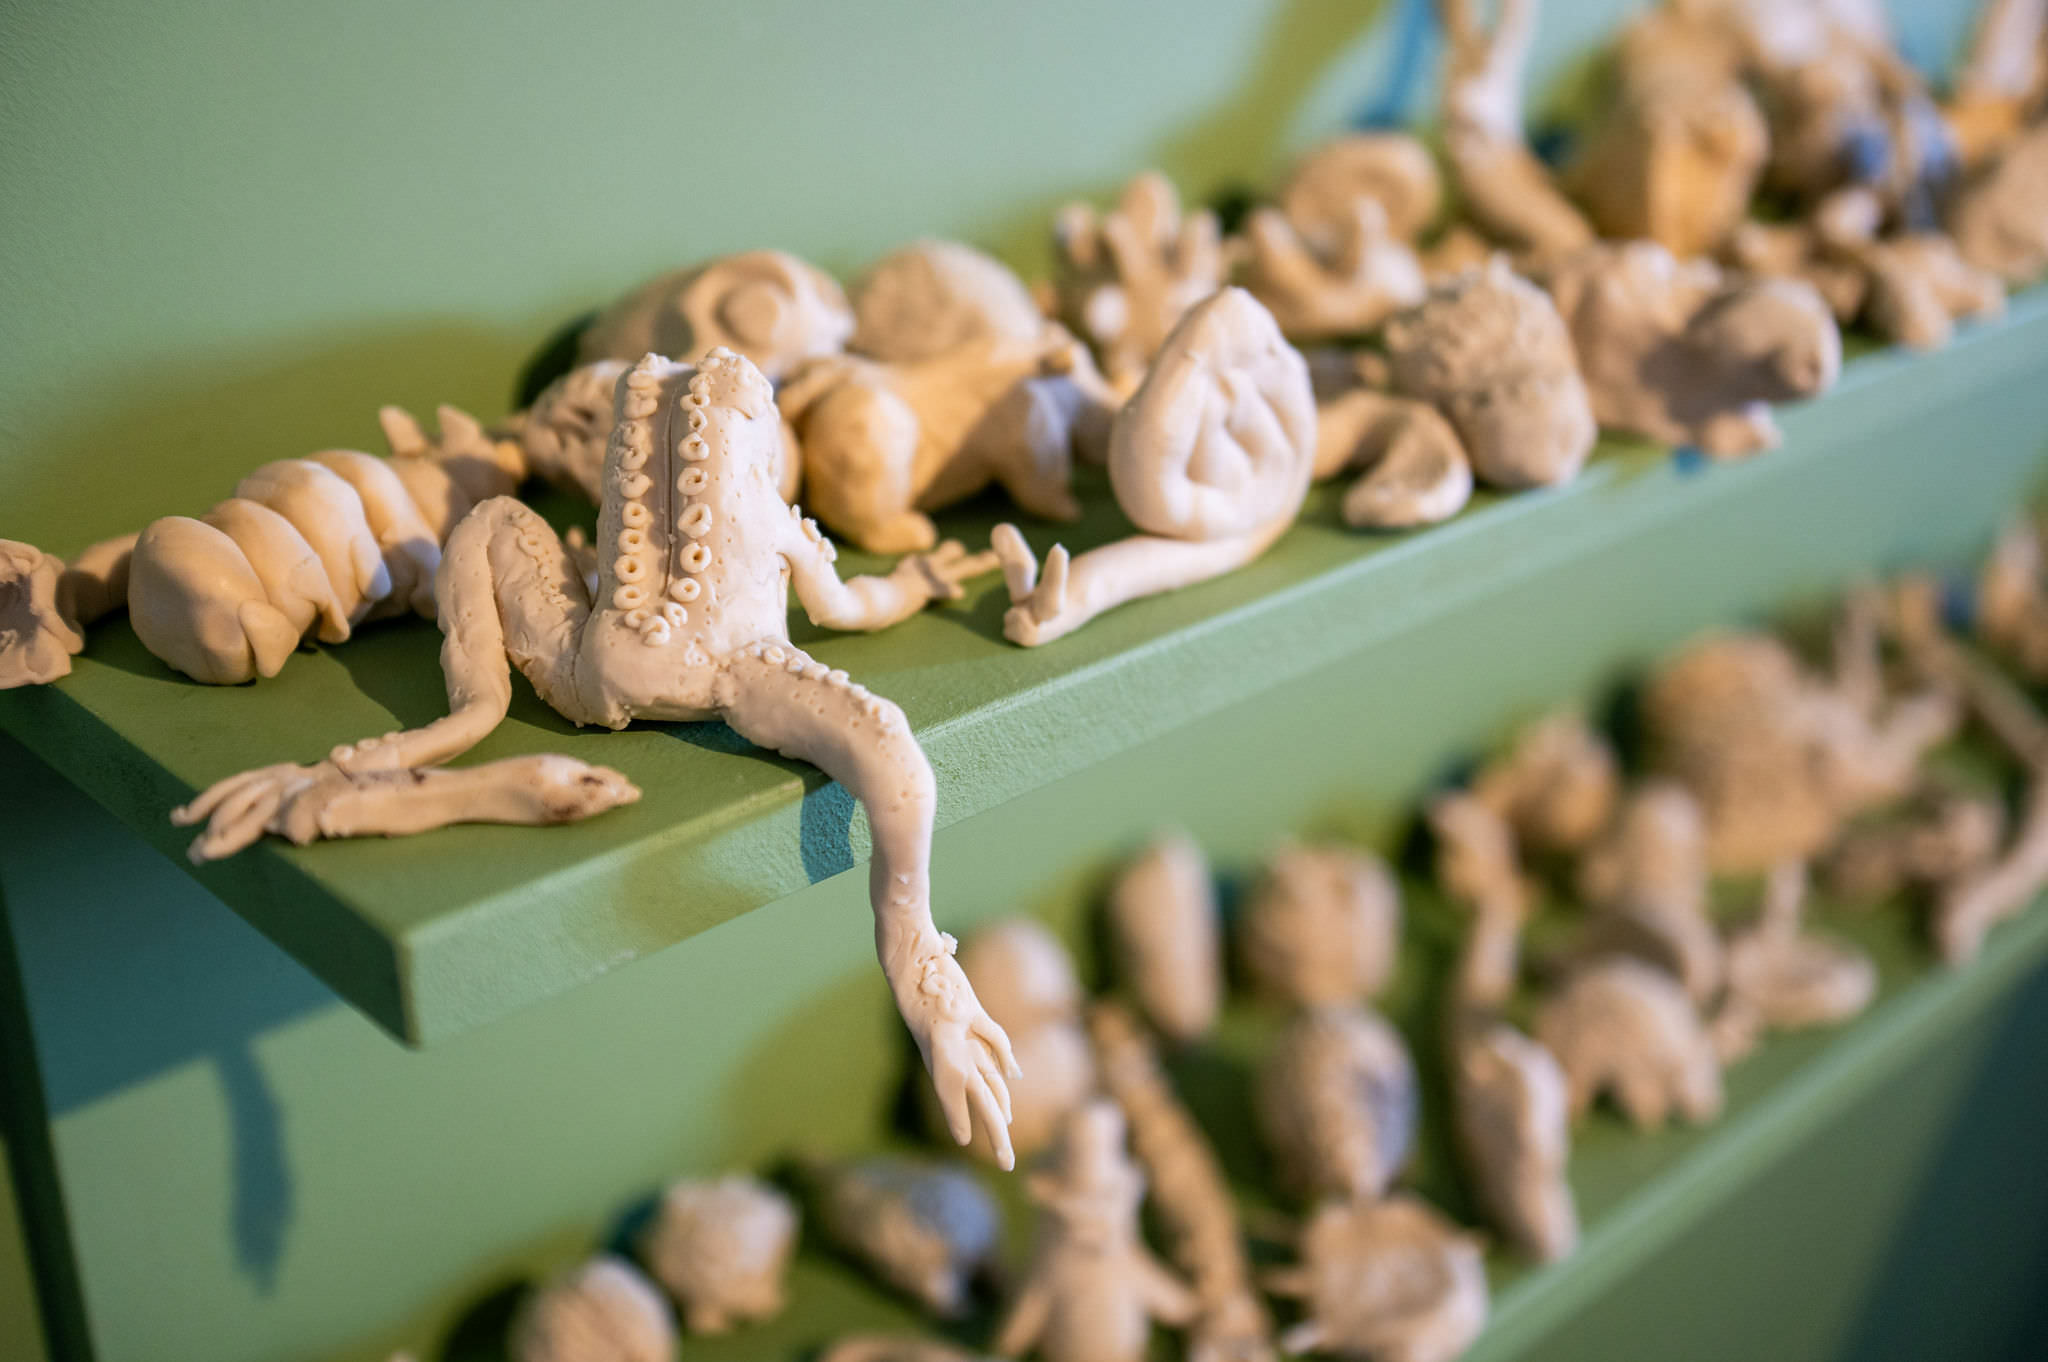 A shelf full of wax animal models